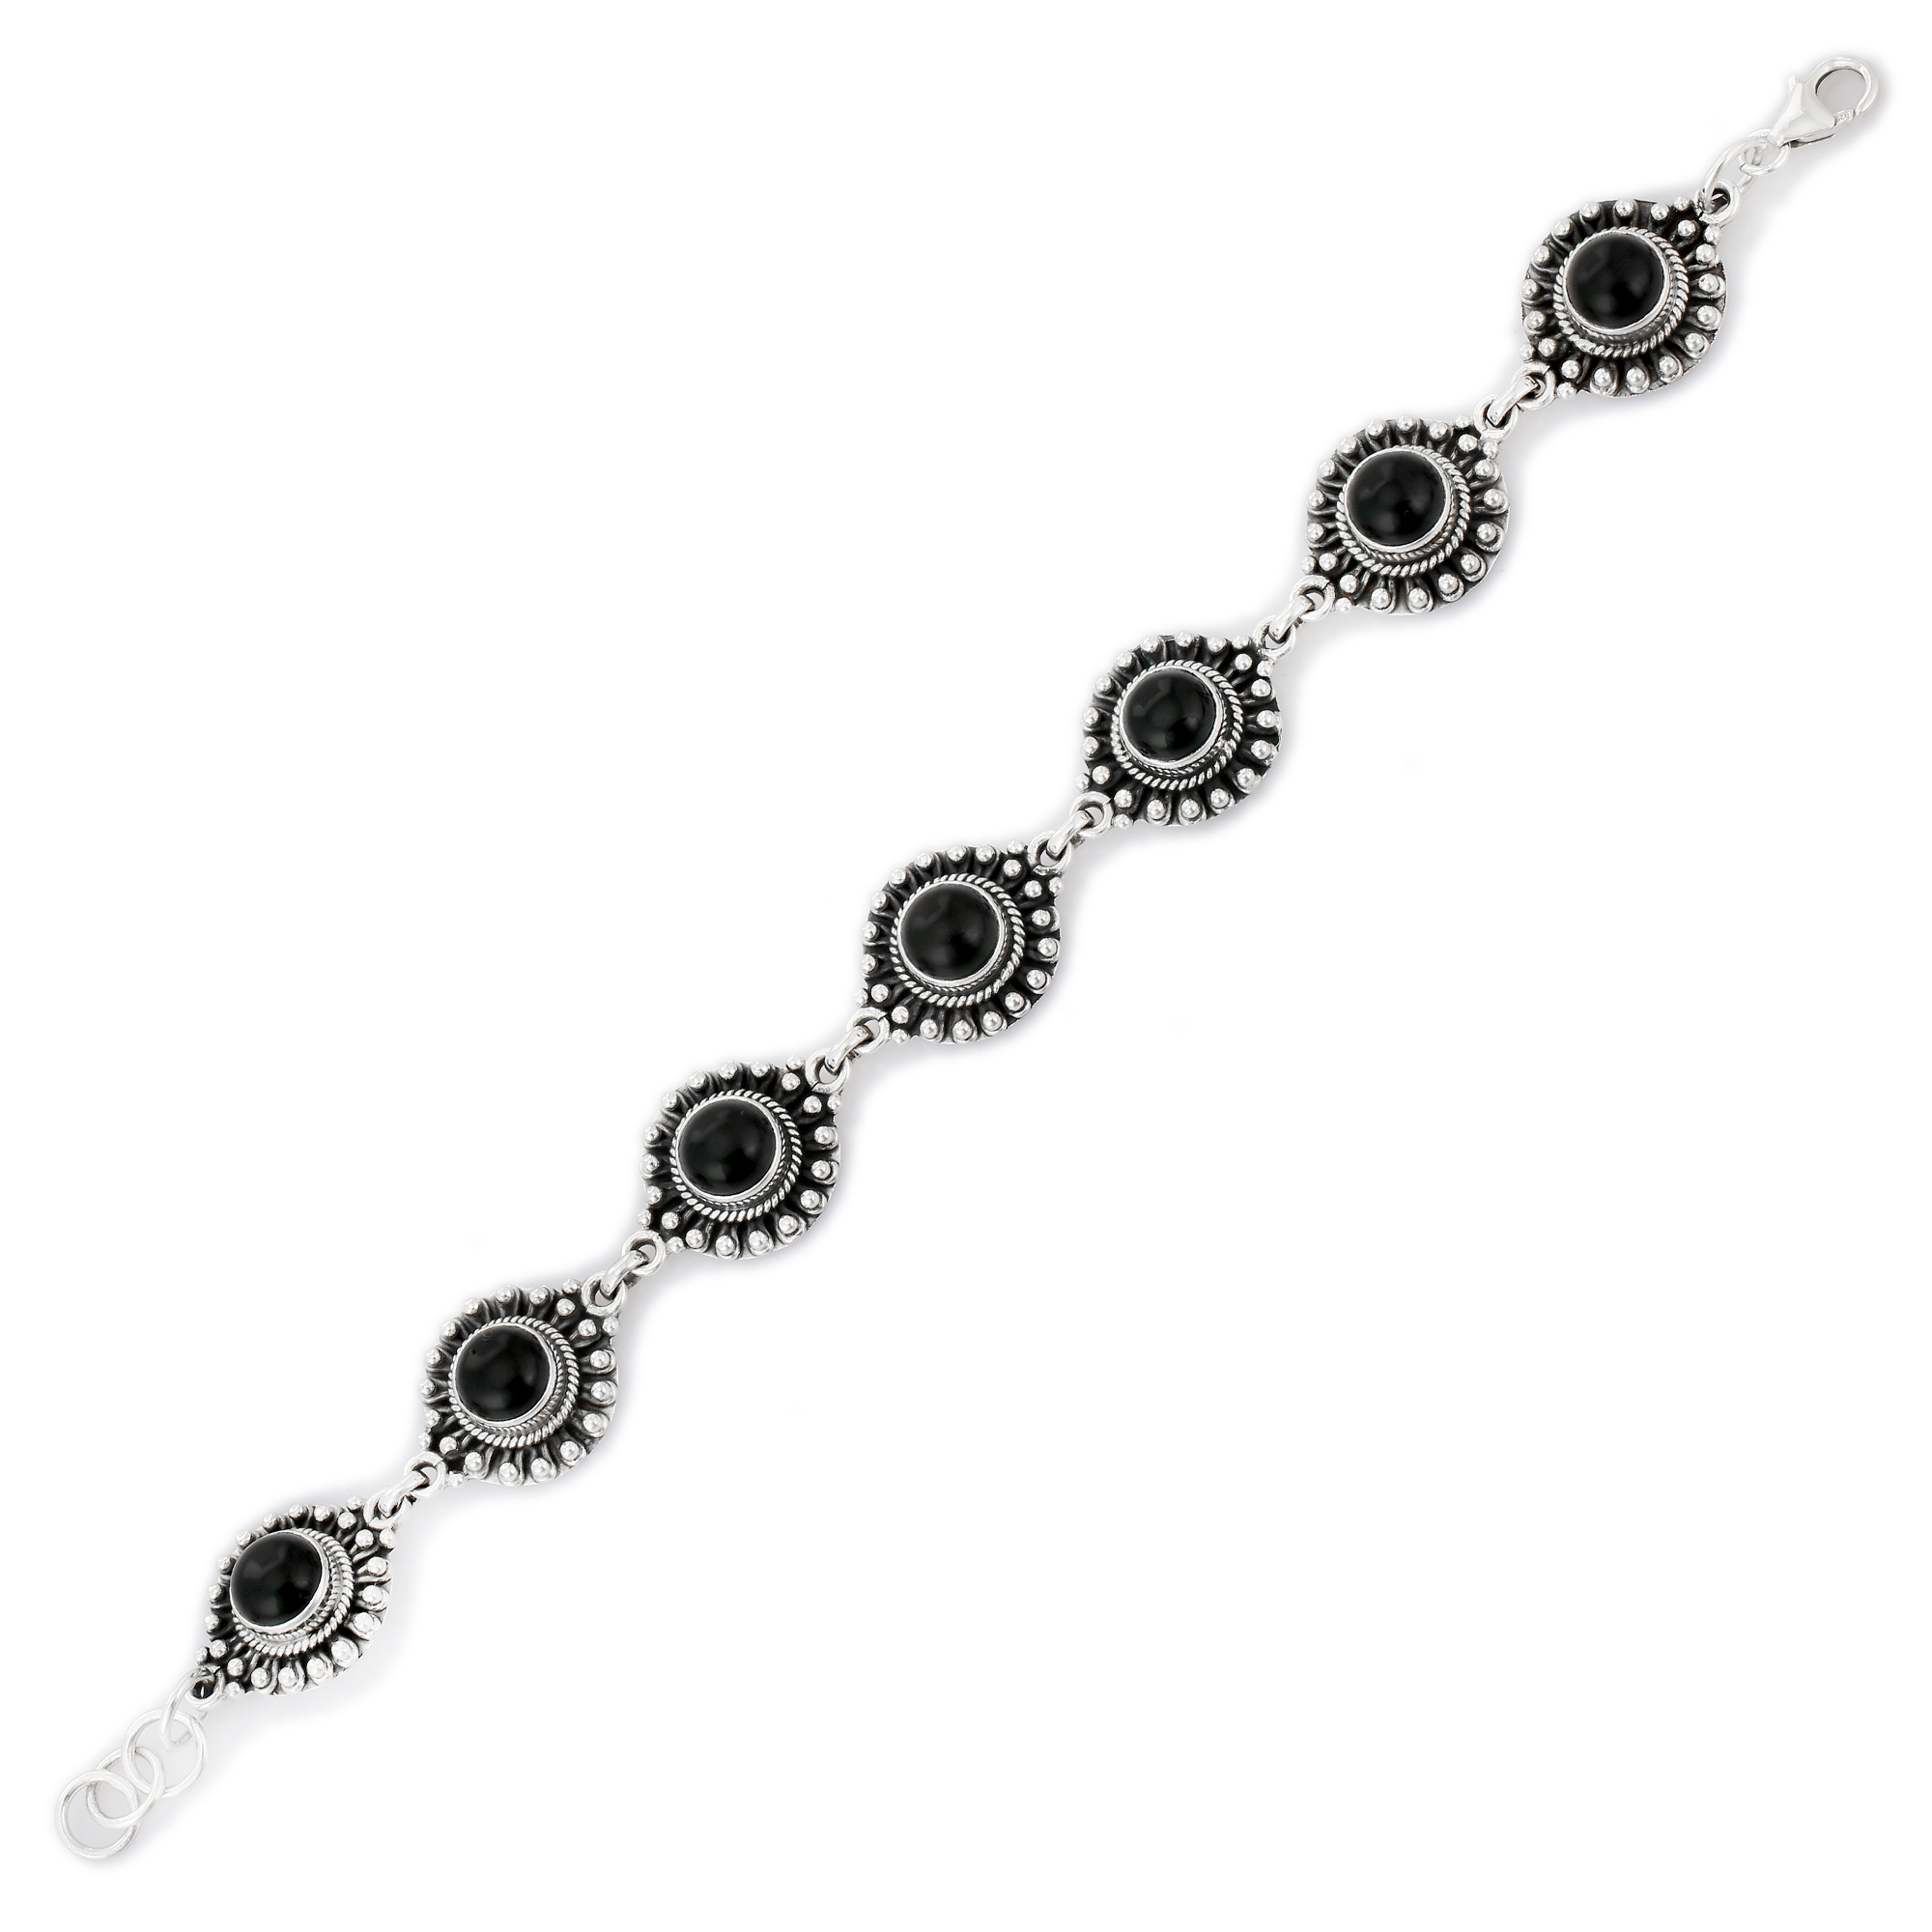 German silver Black Bead Buddha Adjustable Bracelet for Women and Girls. |  K M HandiCrafts India